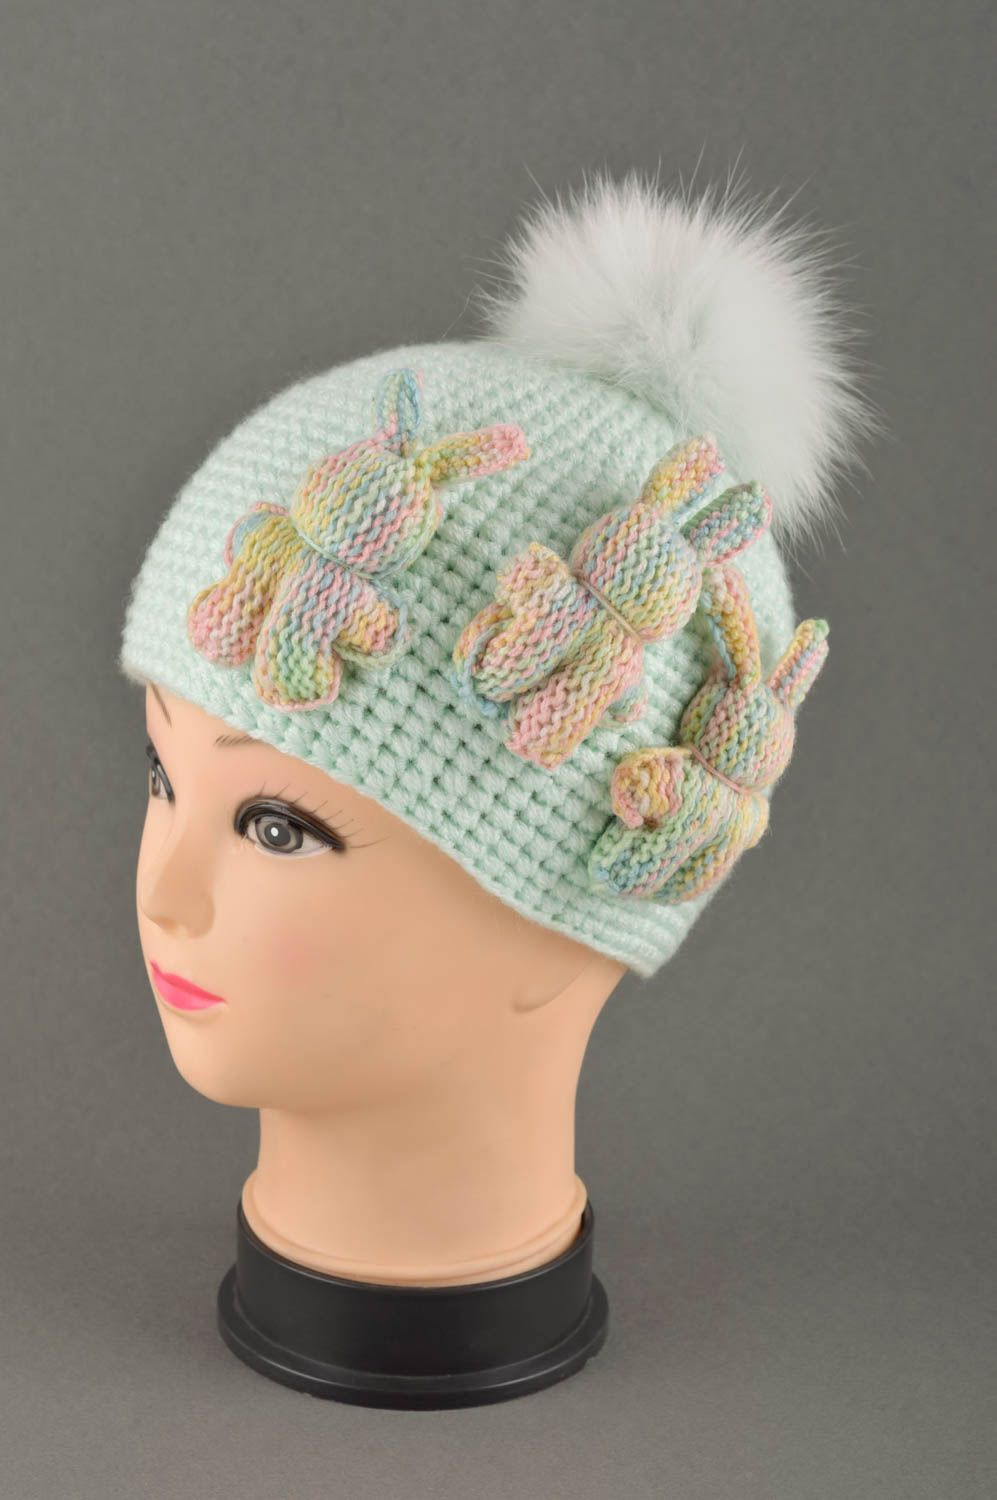 Handmade winter hat warm hat ladies winter hat fashion accessories gifts for her photo 1